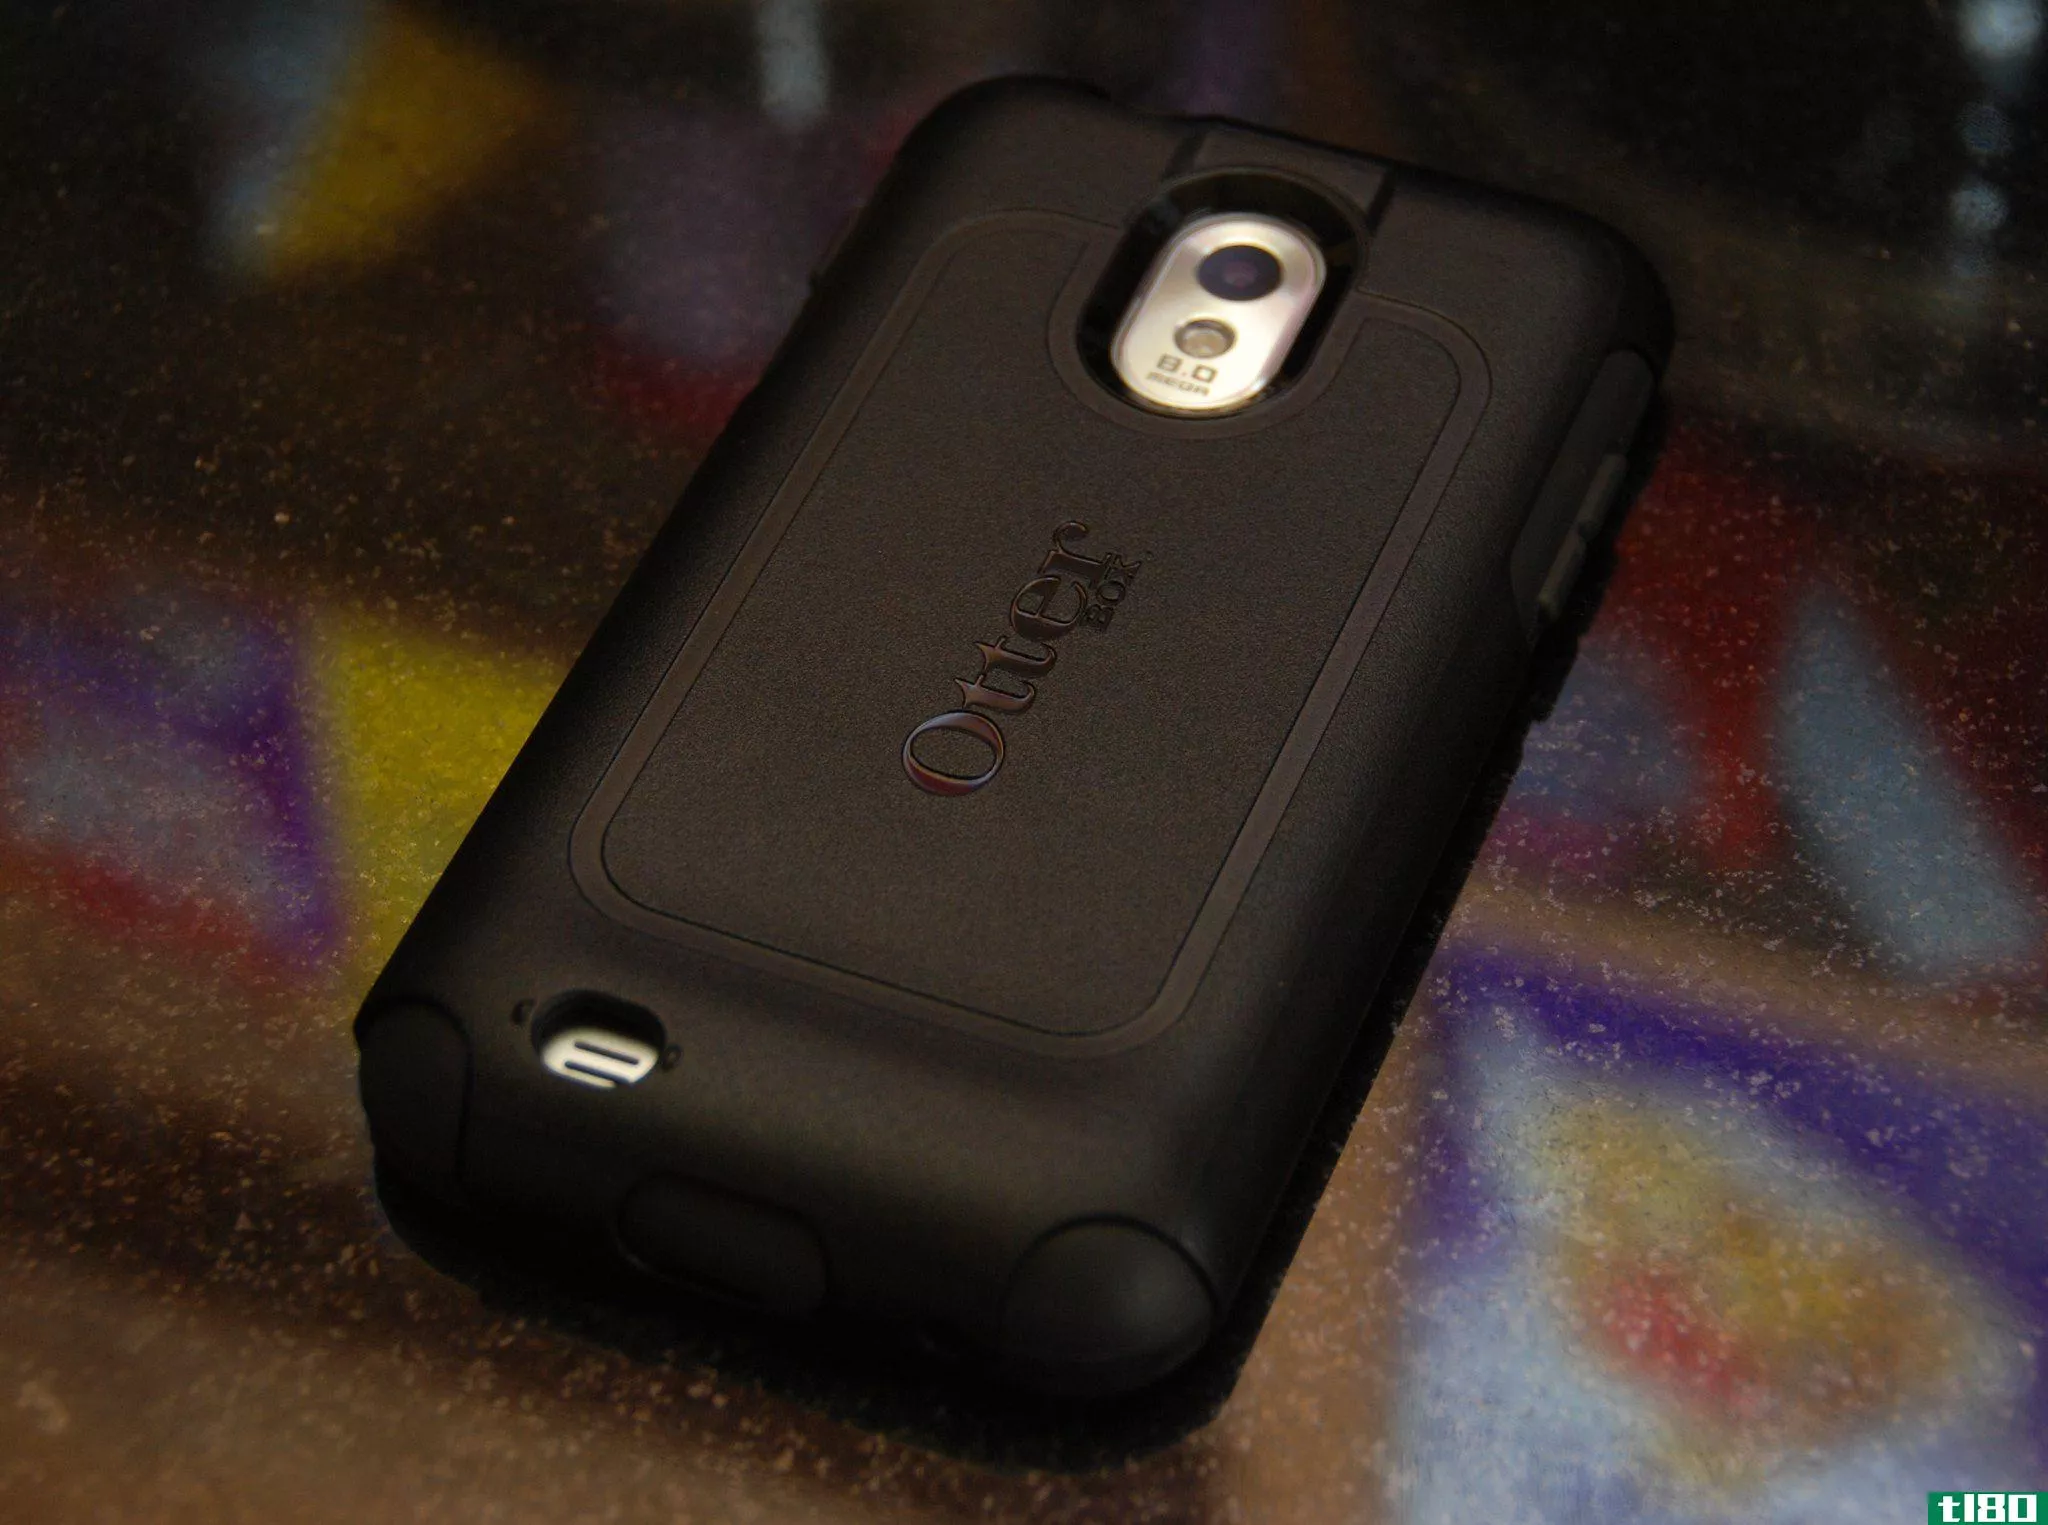 a black Otterbox case on a Samsung Galaxy phone